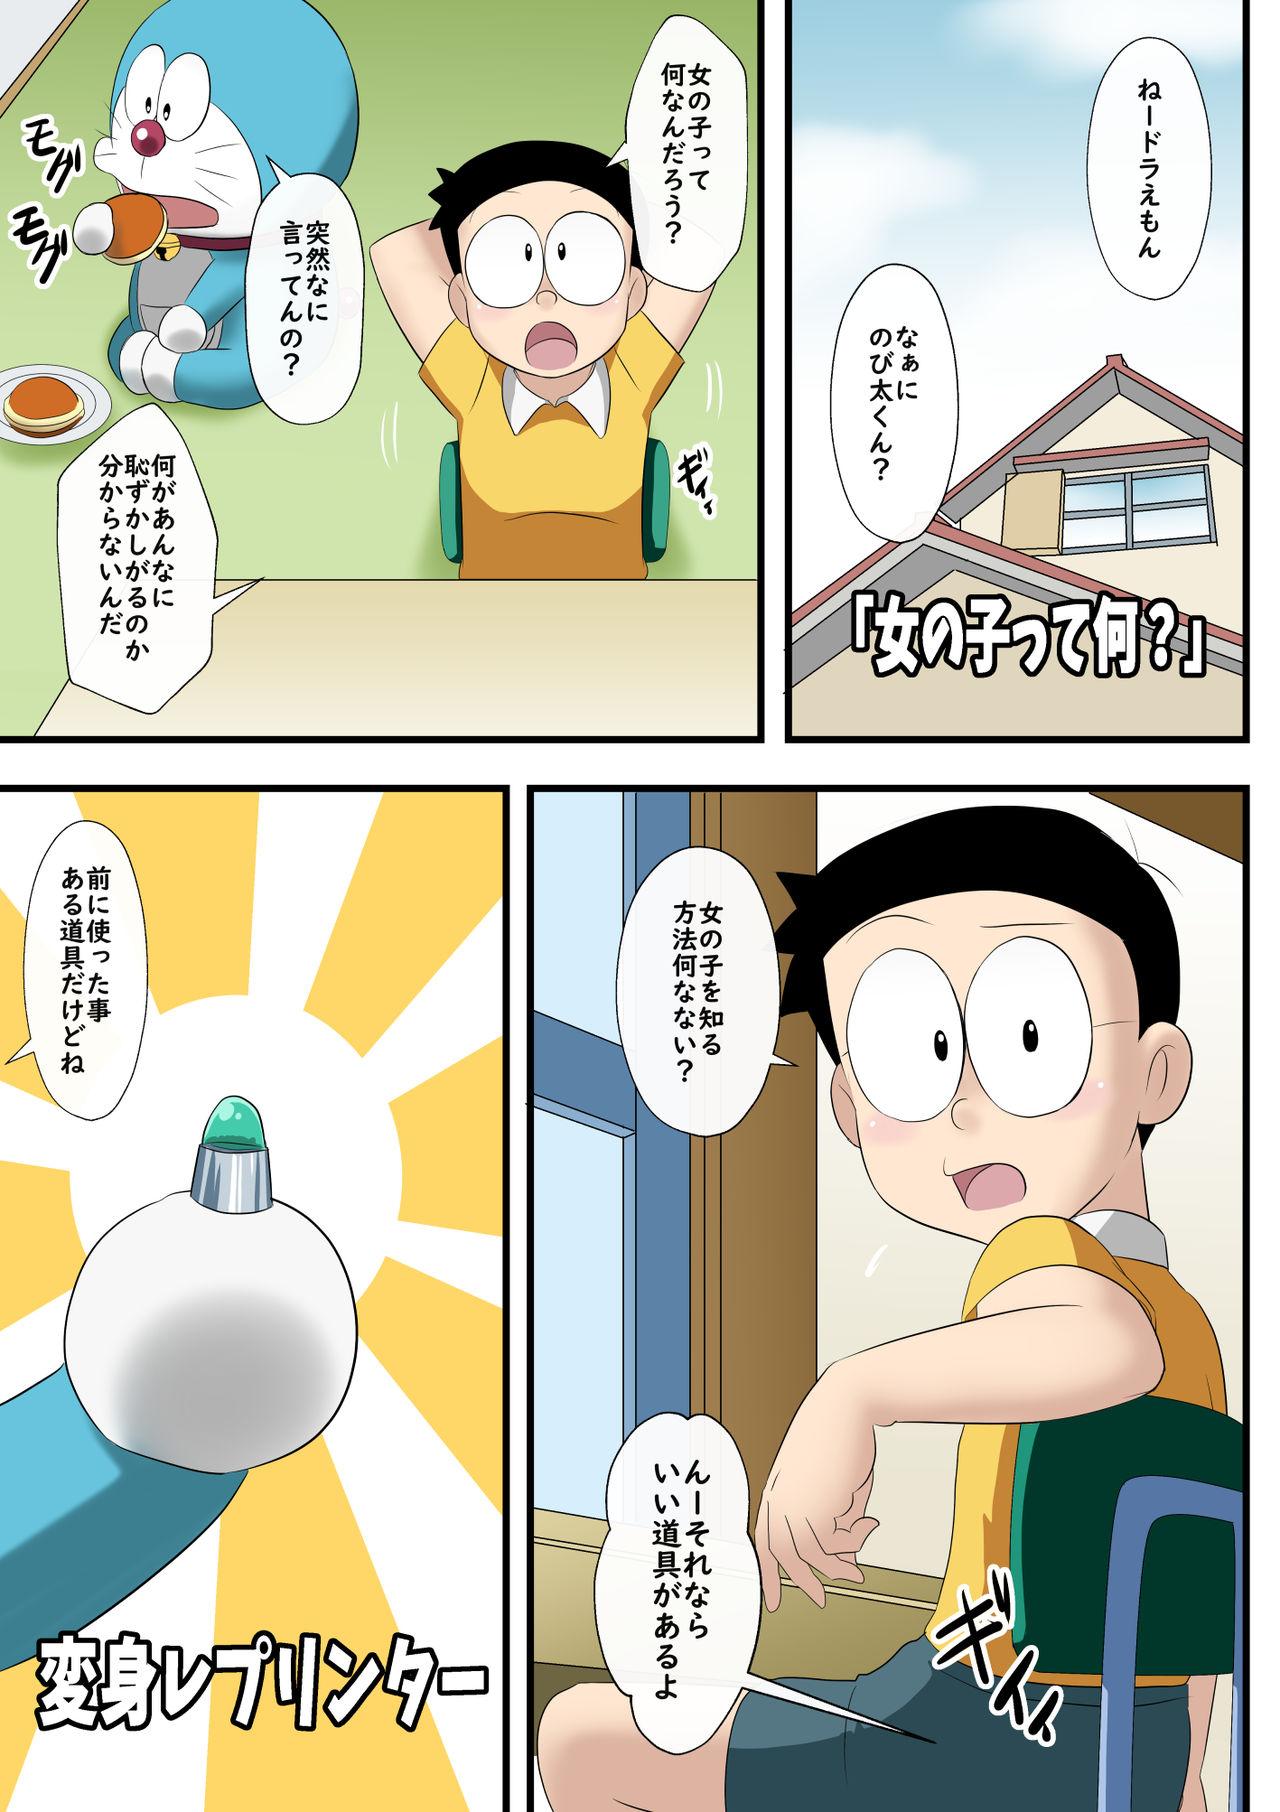 [Circle Takaya] if -sizuka- 6 (Doraemon) 2